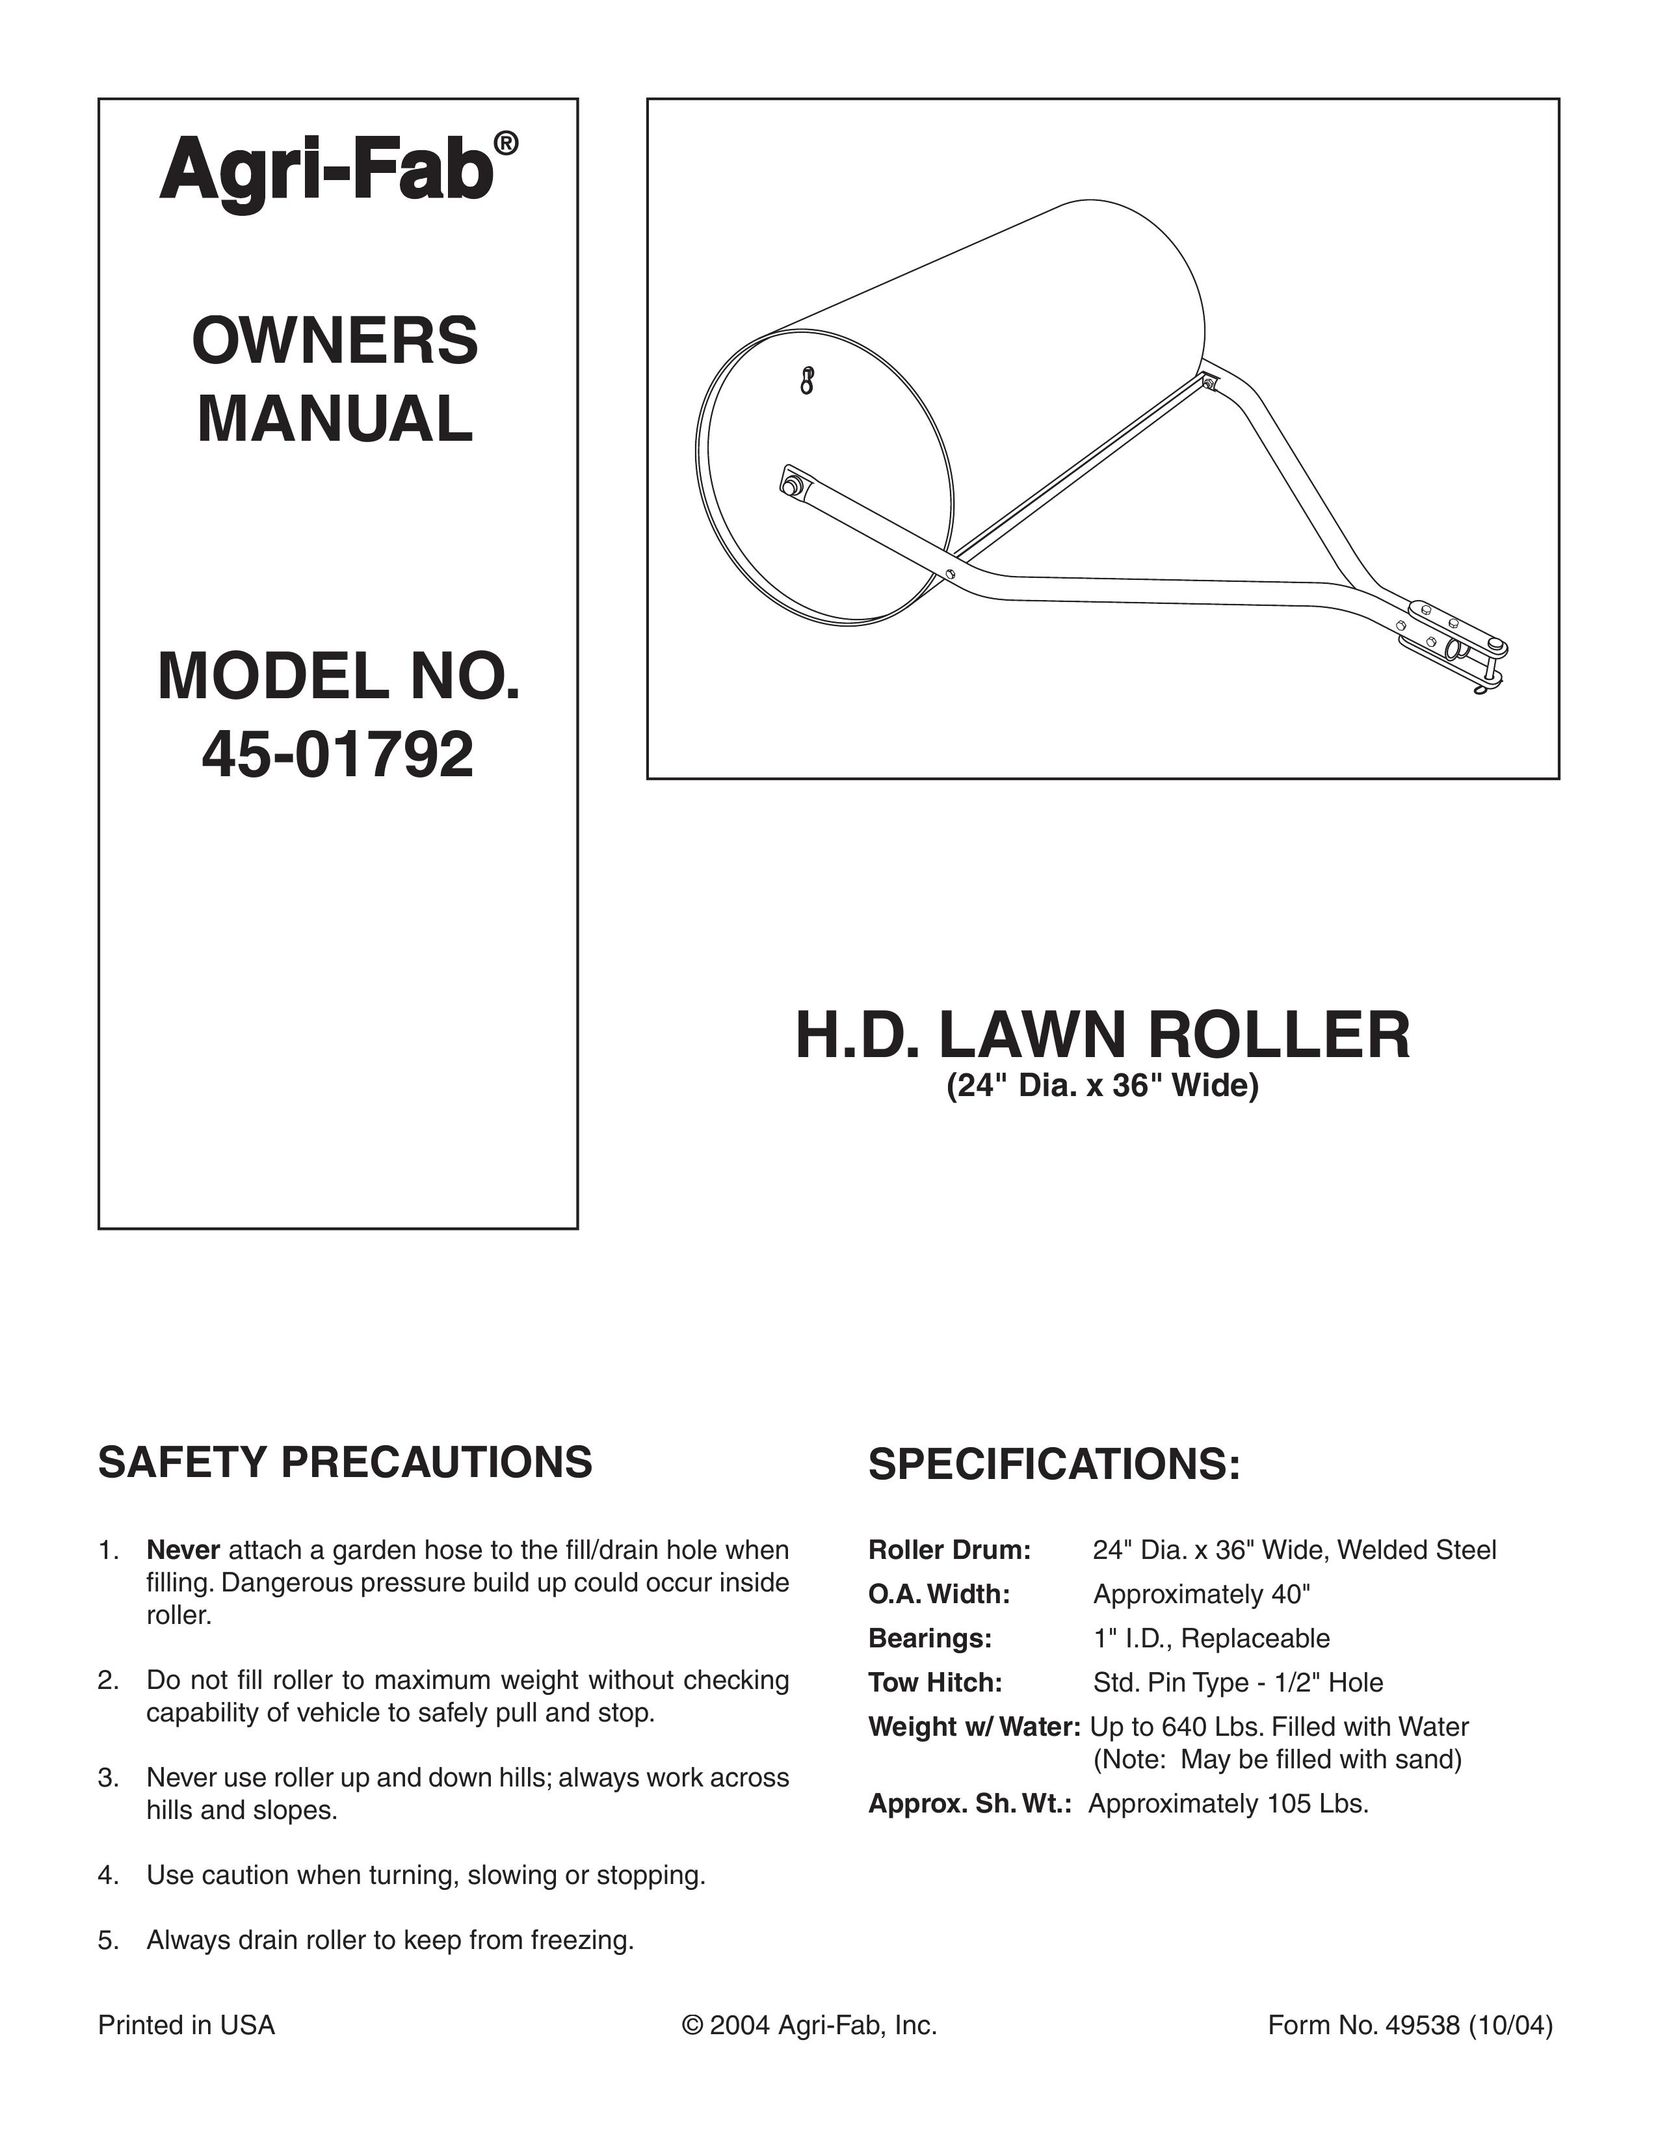 Agri-Fab 45-01792 Power Roller User Manual